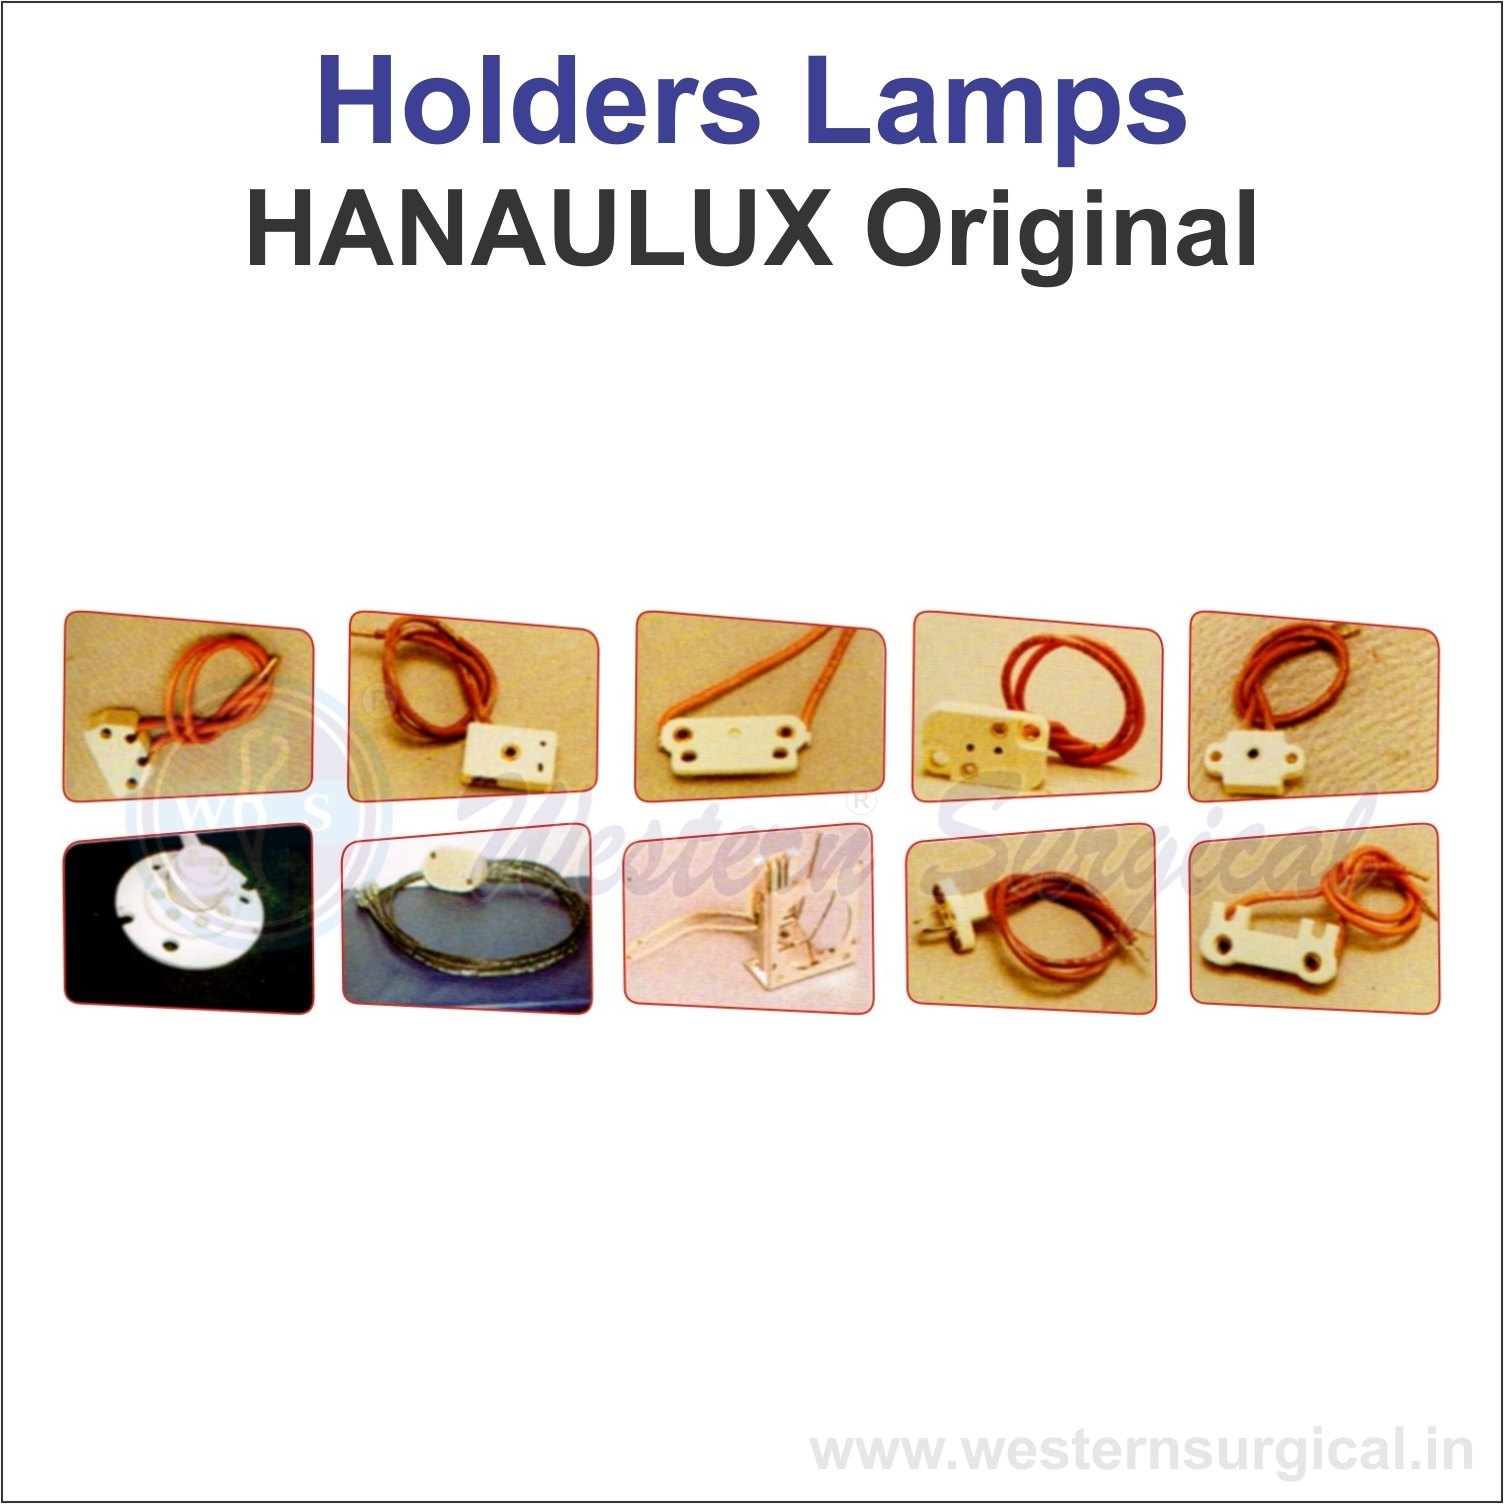 Holders Lamp Hanaulux Original